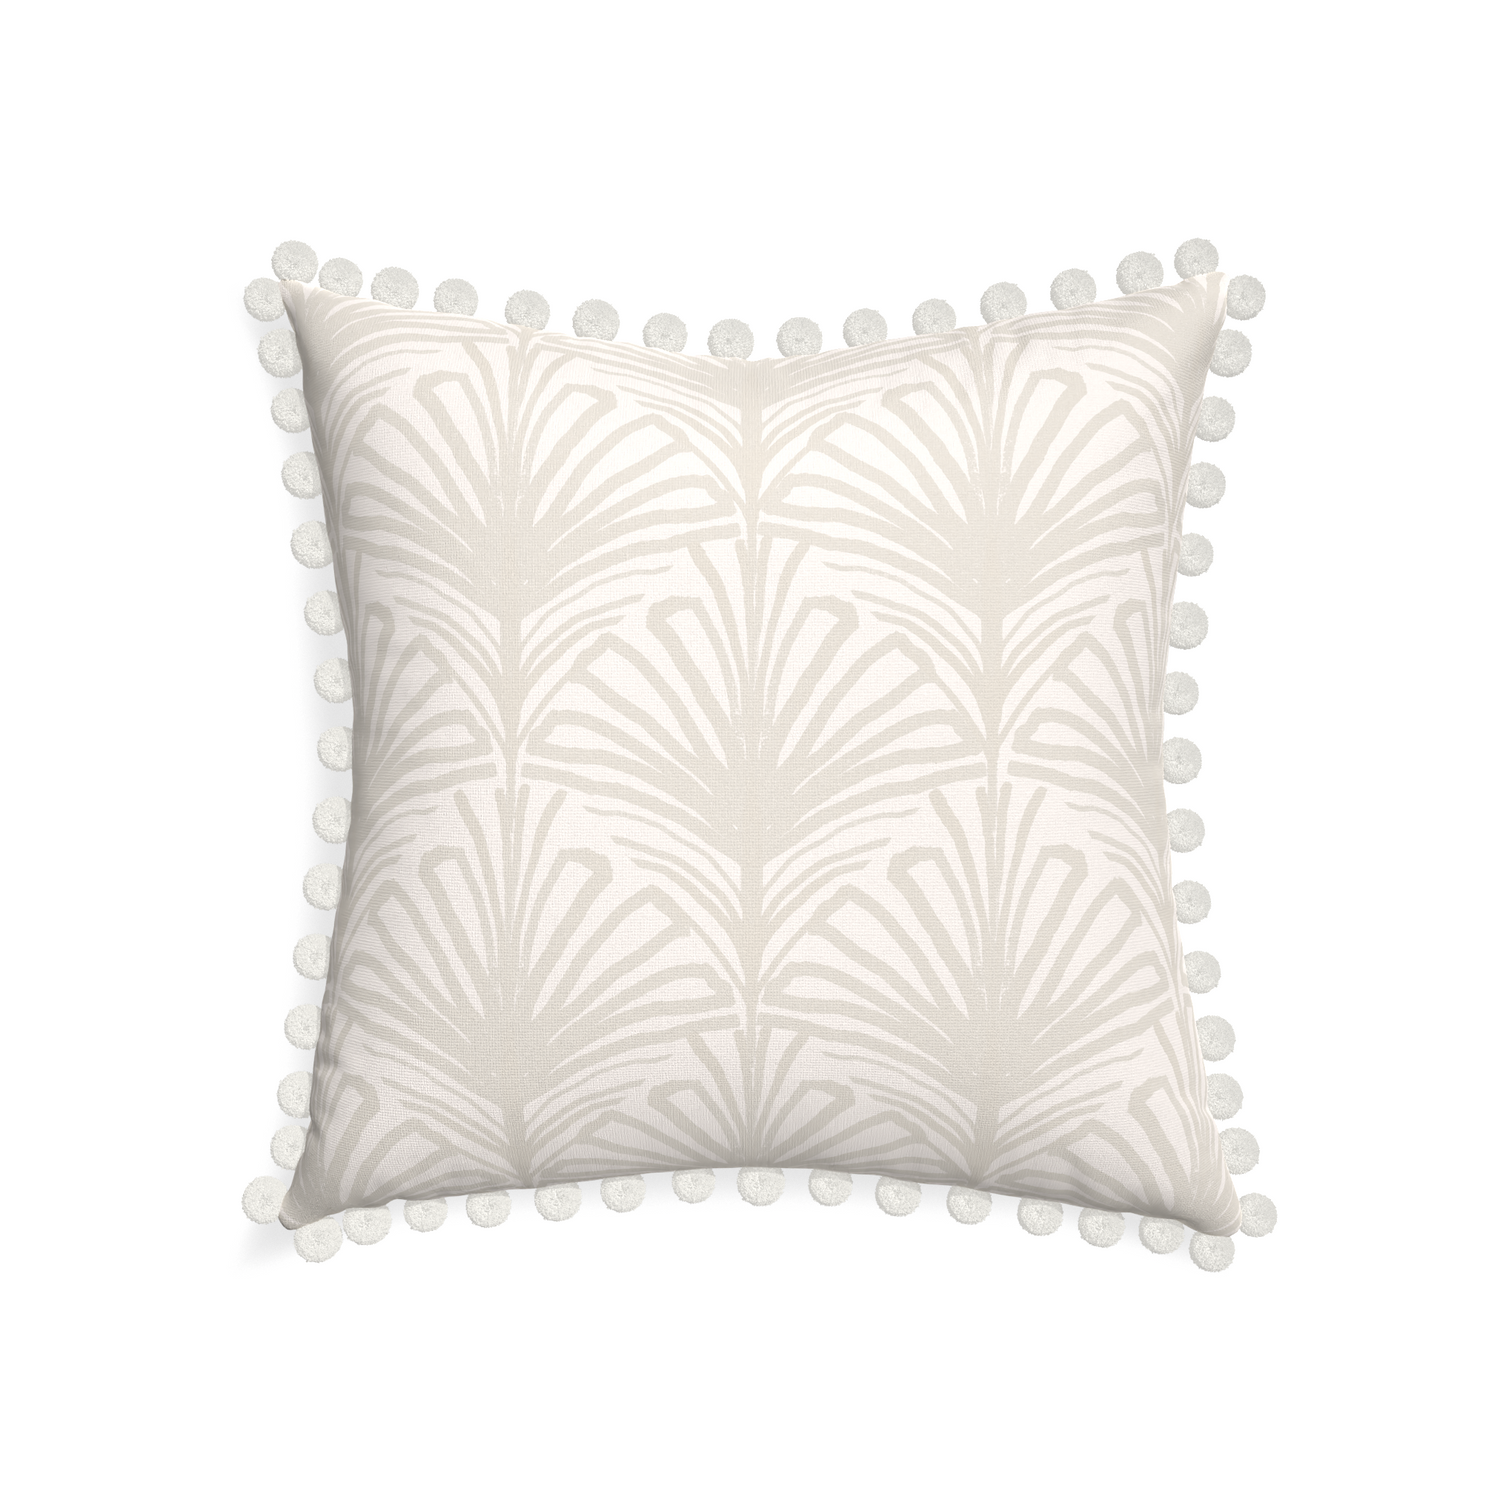 22-square suzy sand custom pillow with snow pom pom on white background